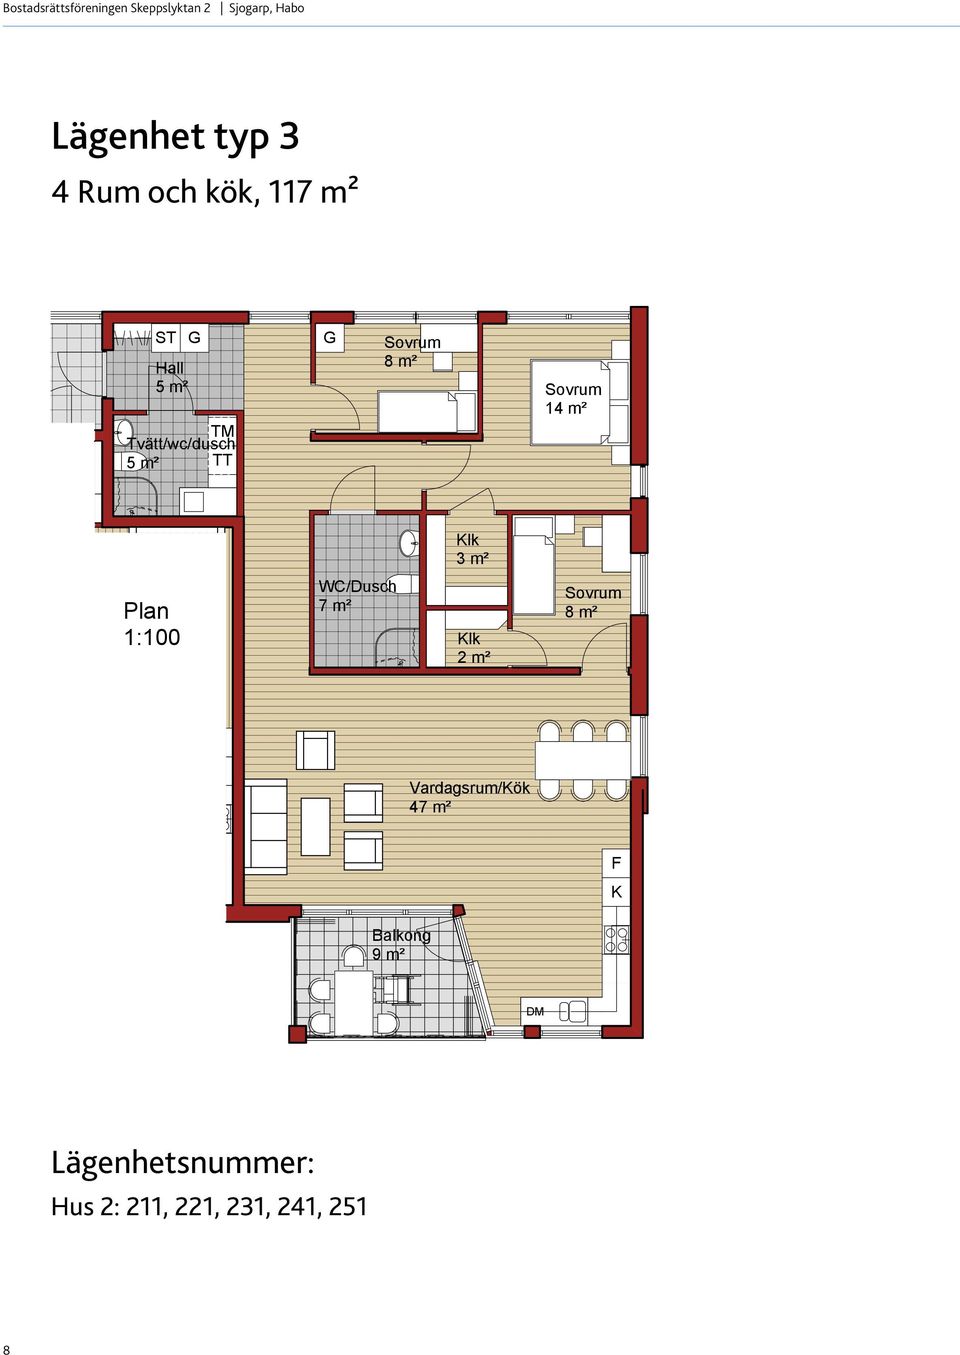 m² 2 m² Vardagsrum/ök 47 m² Balkong